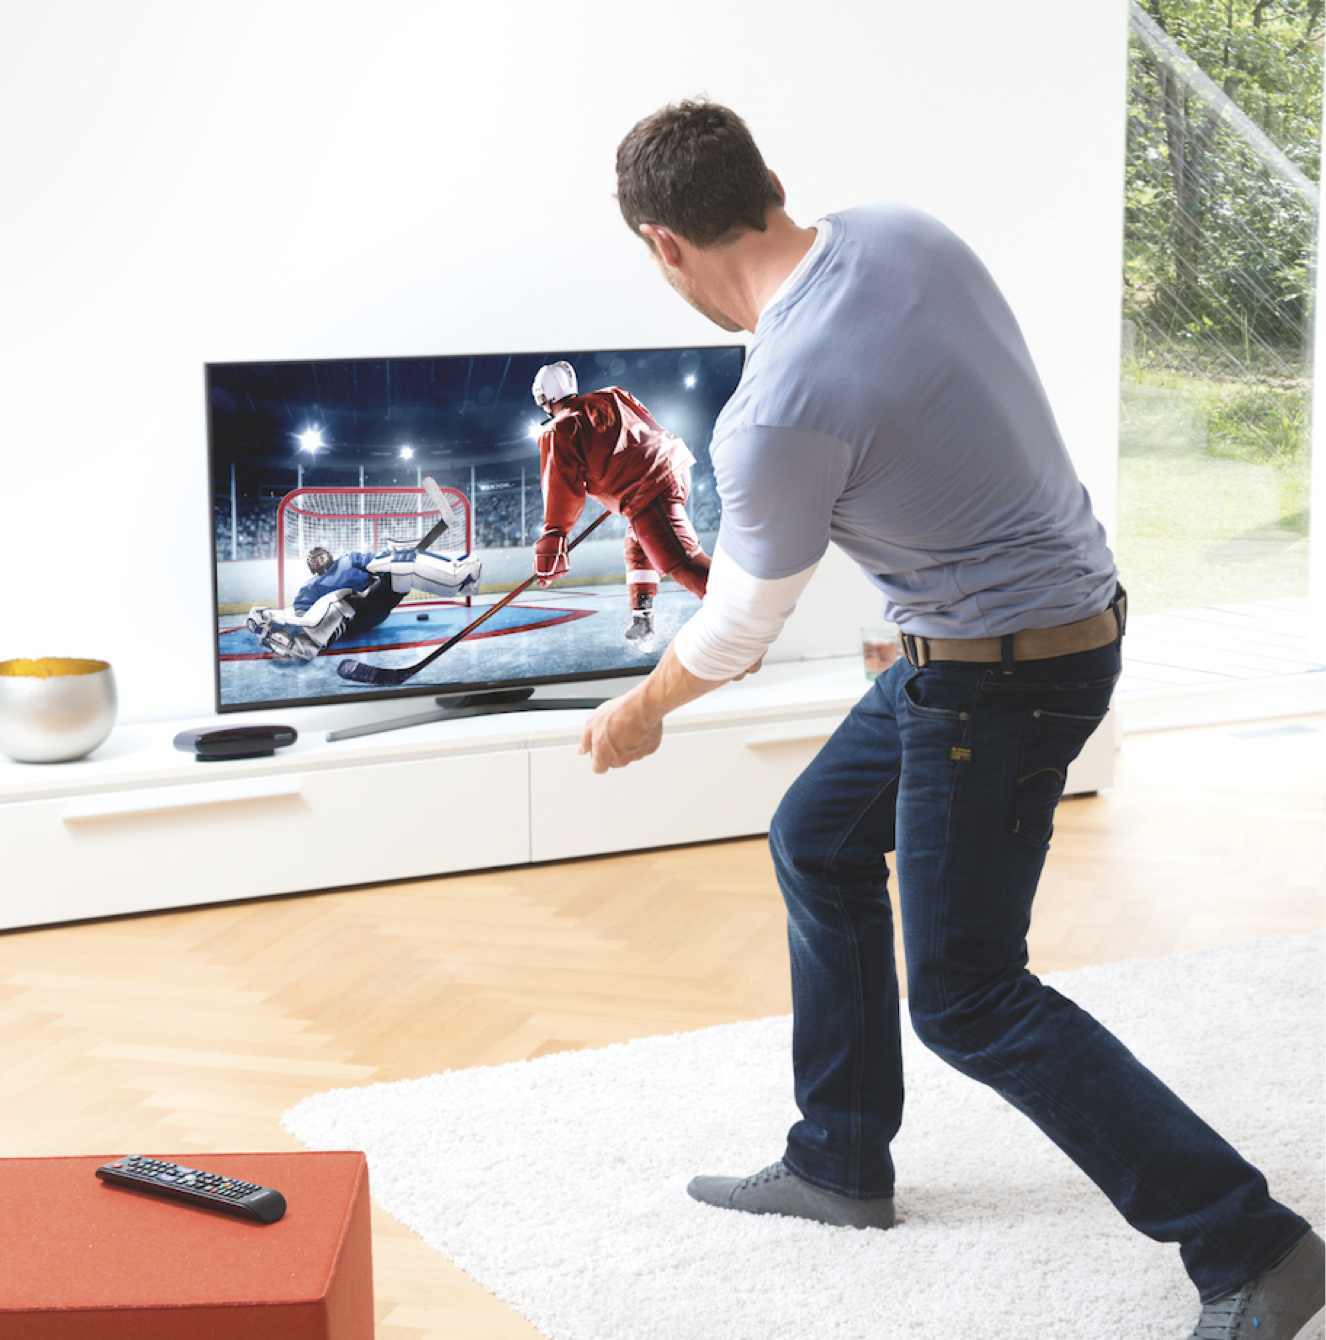 Playing hockey game on TV